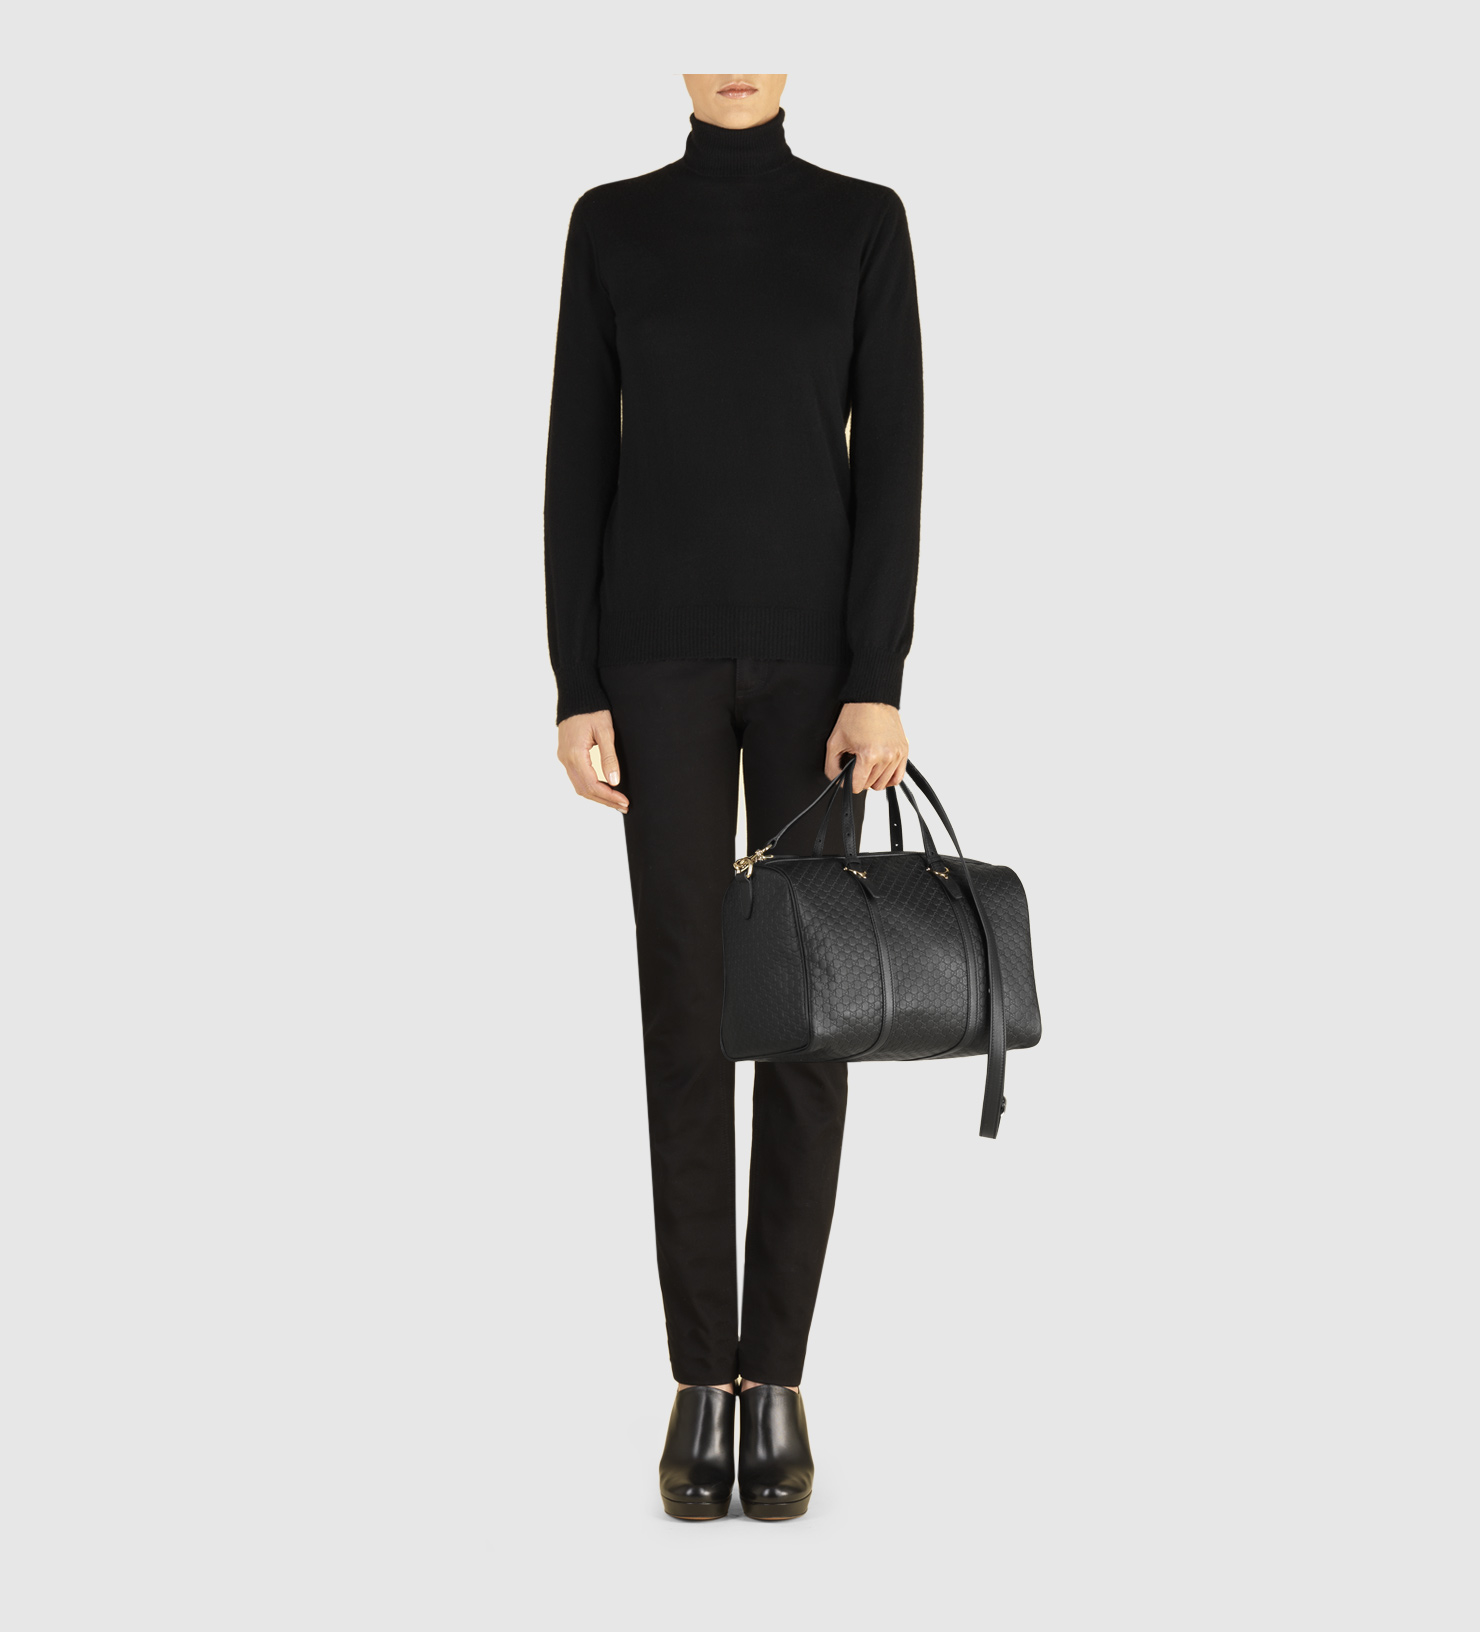 Gucci Nice Microguccissima-Leather Boston Bag in Black - Lyst